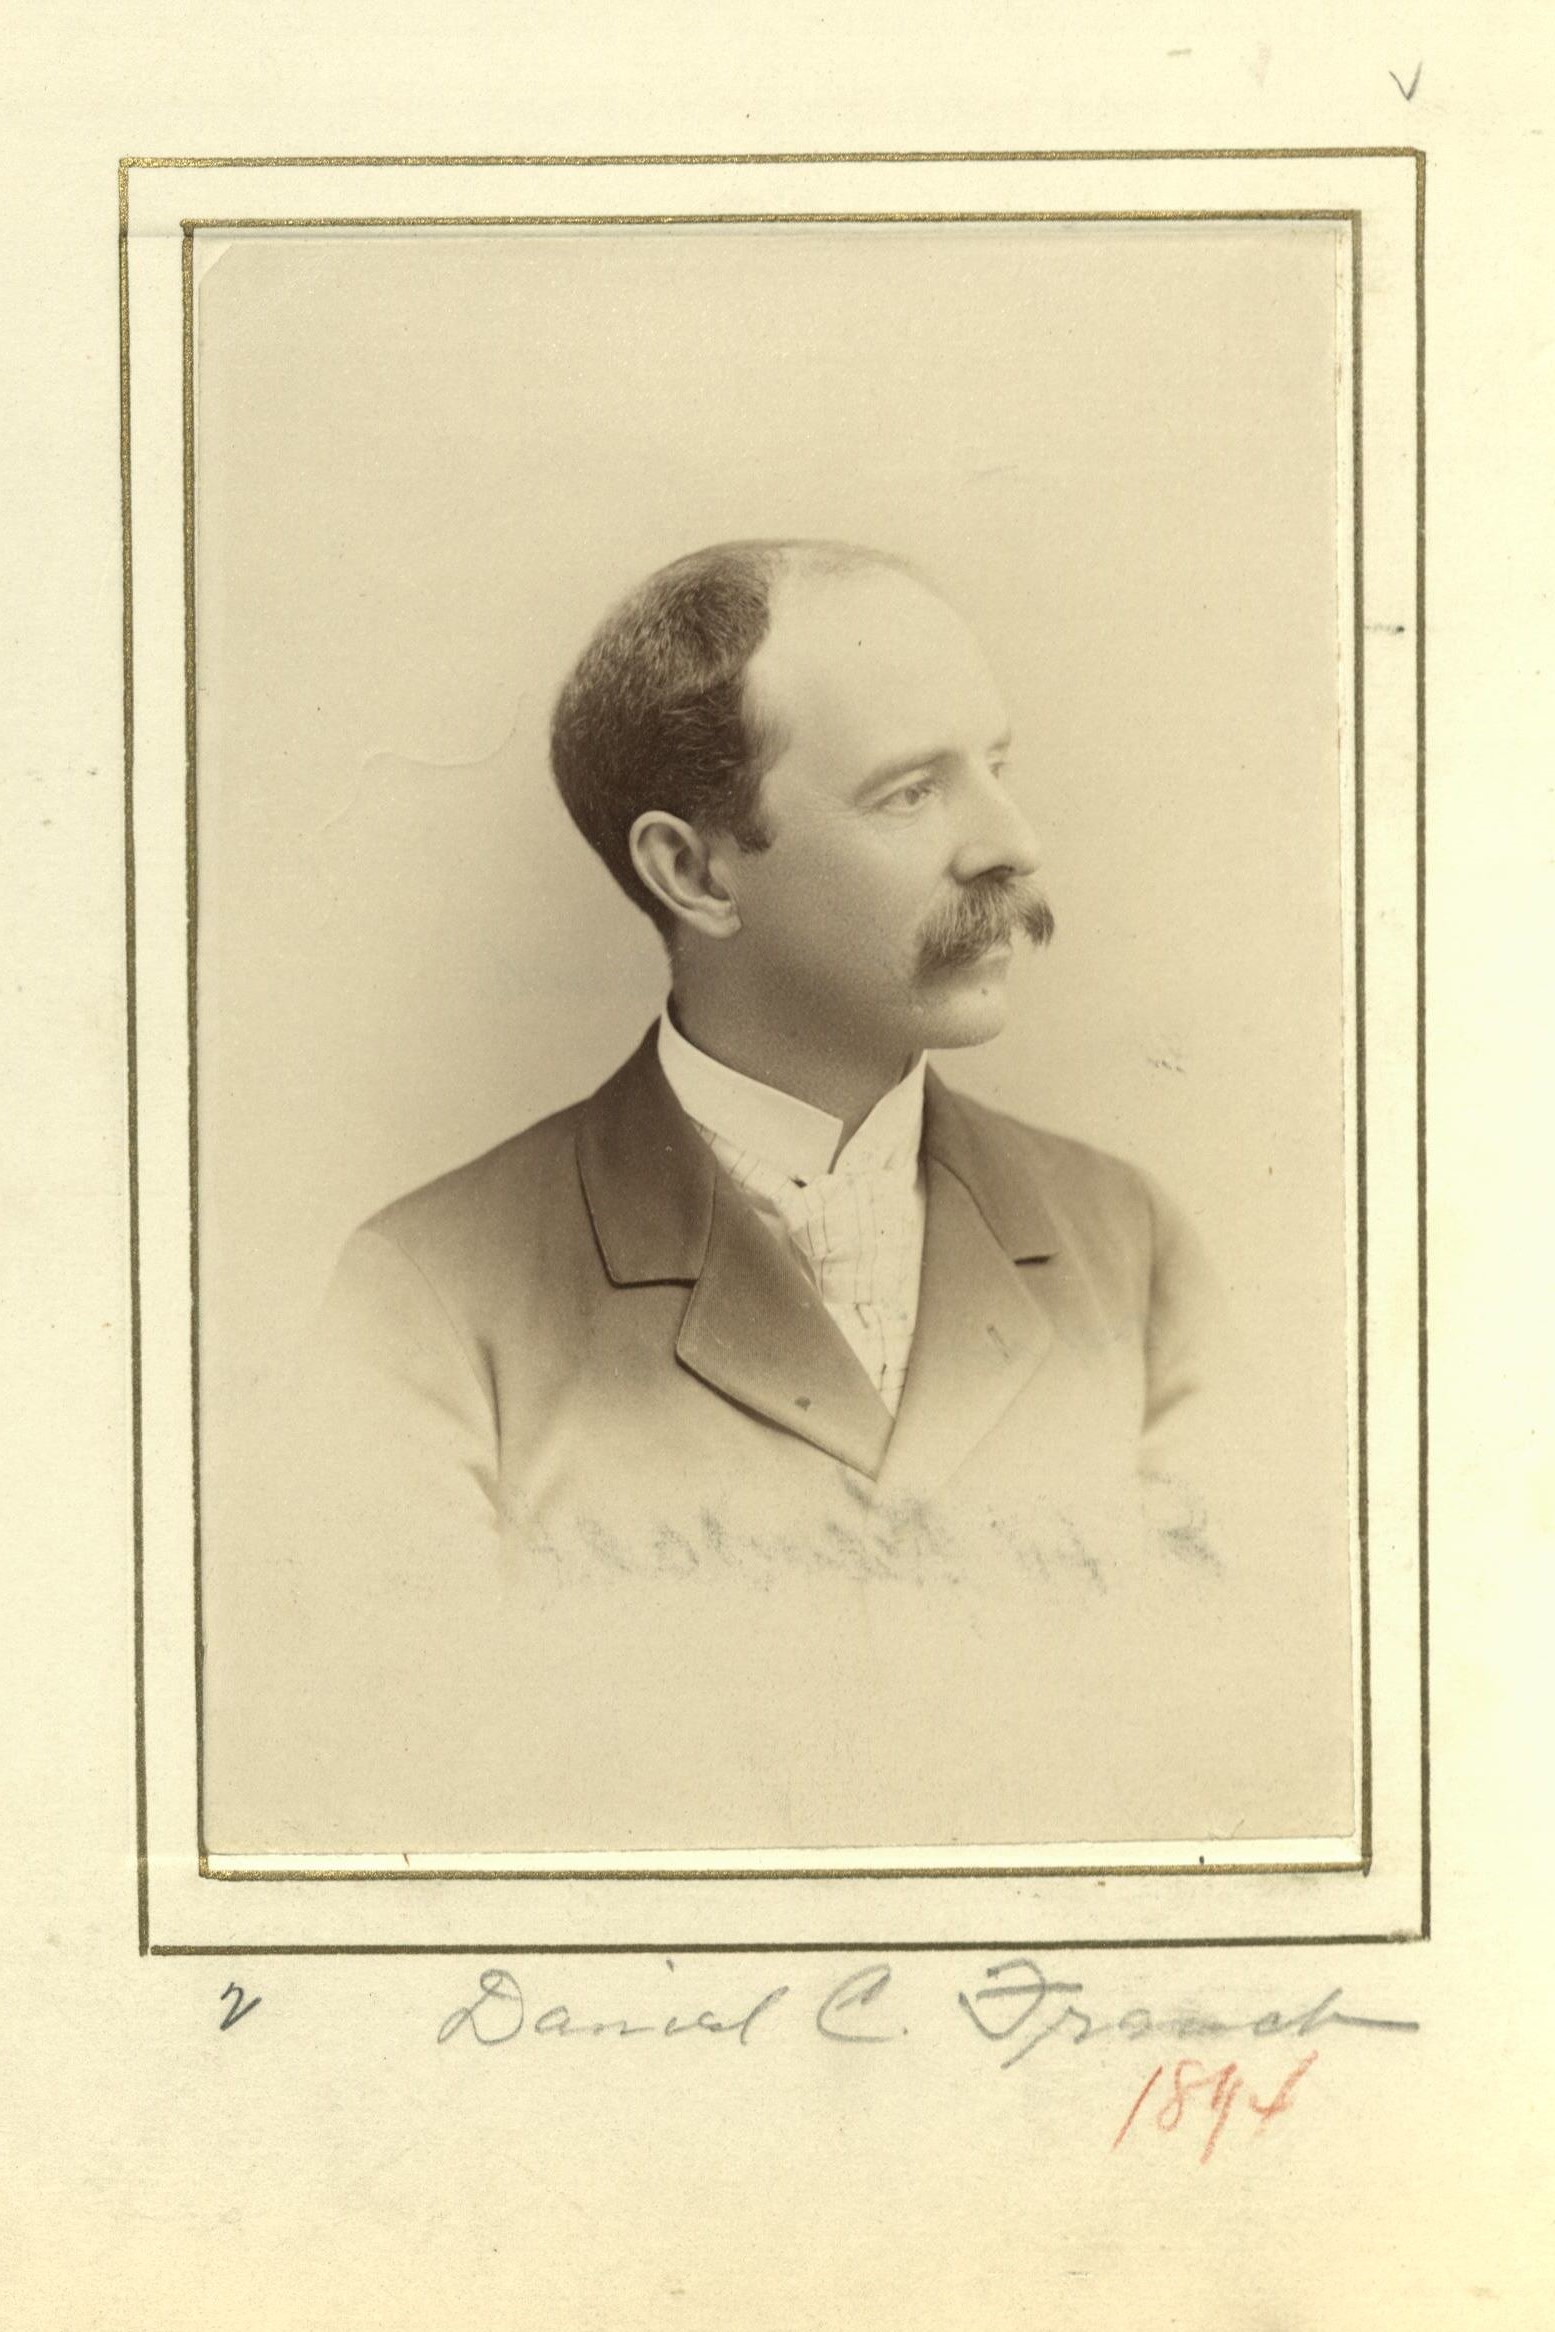 Member portrait of Daniel Chester French